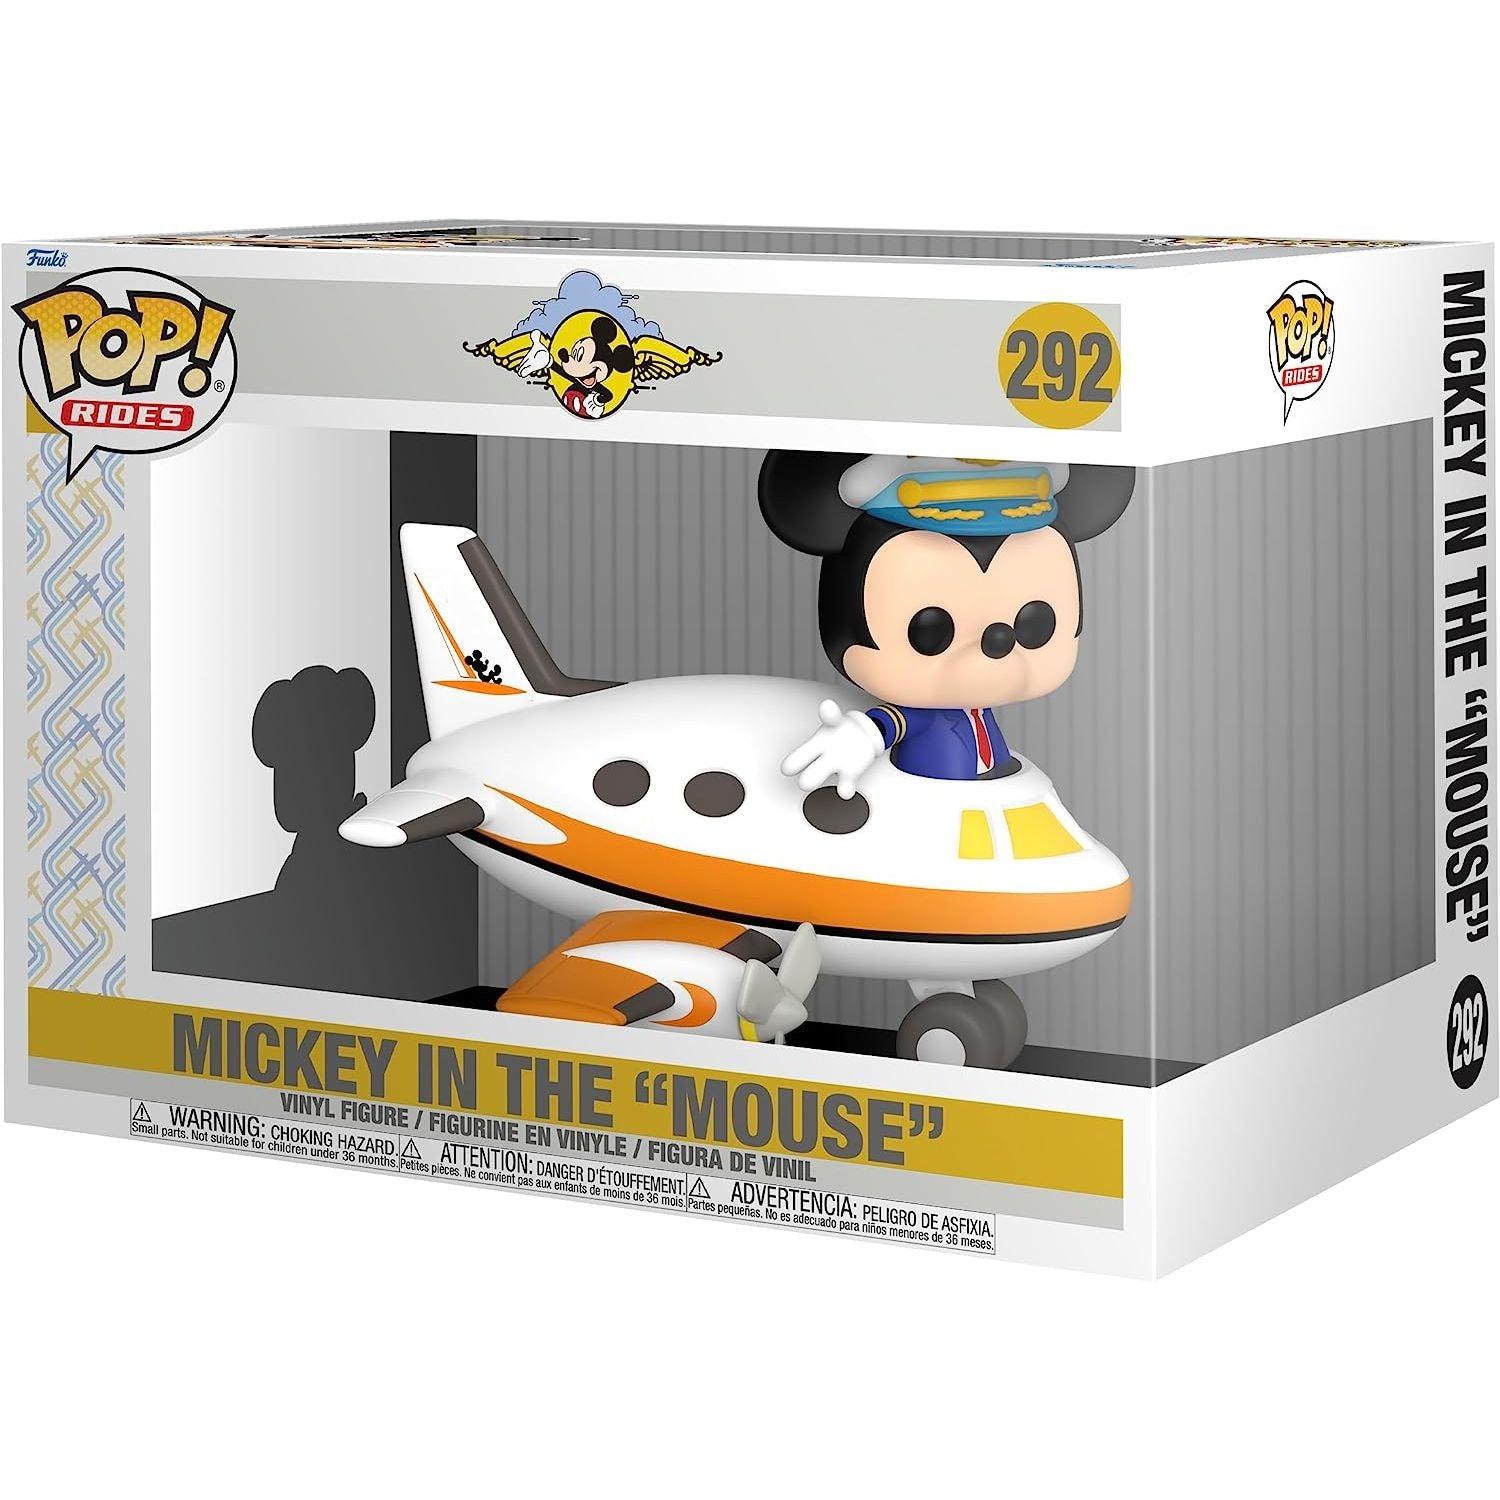 Funko Pop Disney Mickey Mouse One Walt’s Plane - Pilot Mickey Mouse Pop! Ride- Mickey in The Mouse - BumbleToys - 18+, Action Figures, Boys, Deluxe, Disney, Funko, POPSIES, Pre-Order